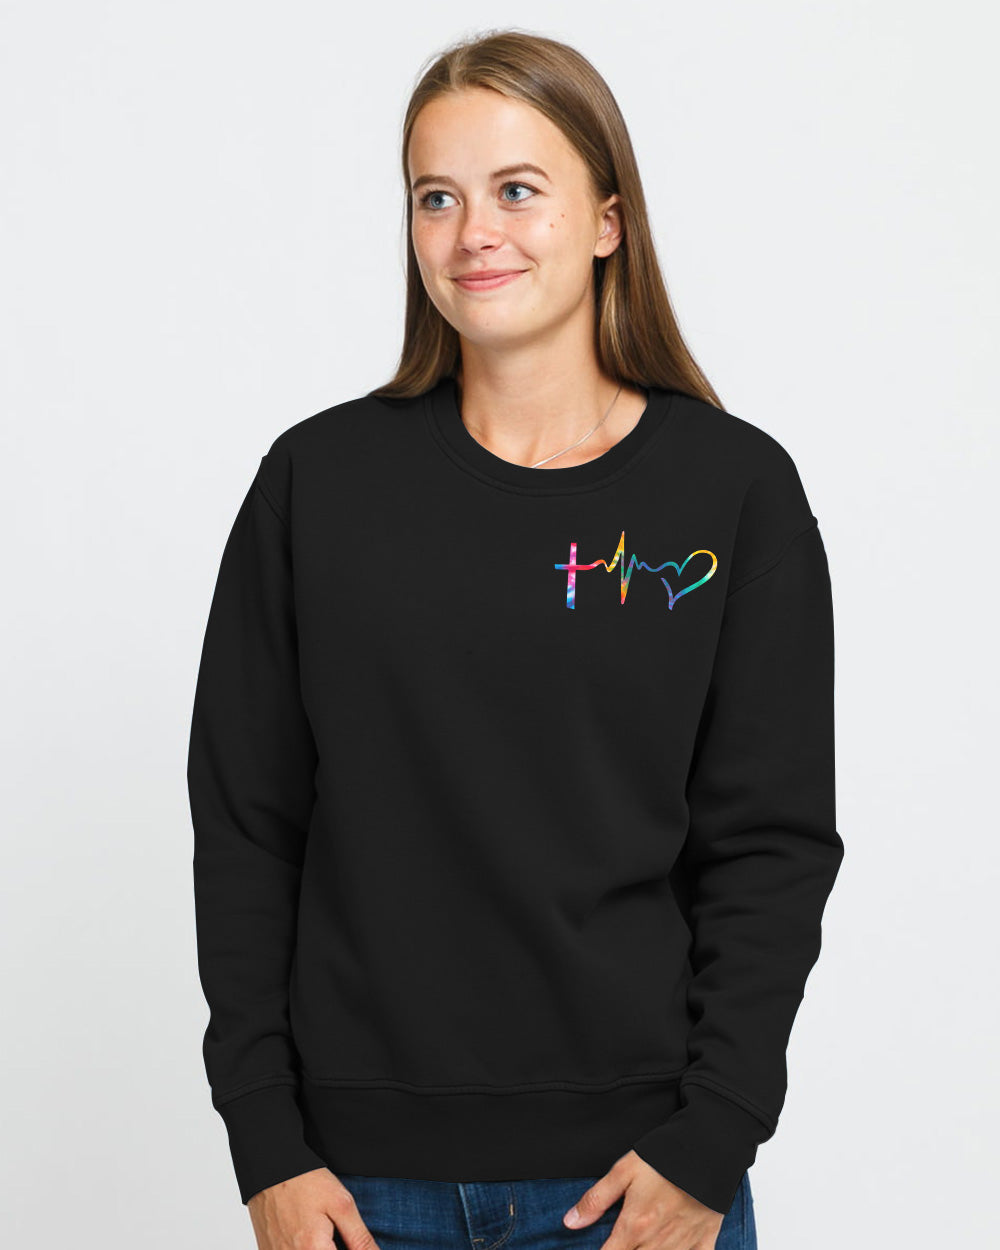 Way Maker Miracle Worker Tie Dye Cross Half Text Women's Christian Sweatshirt